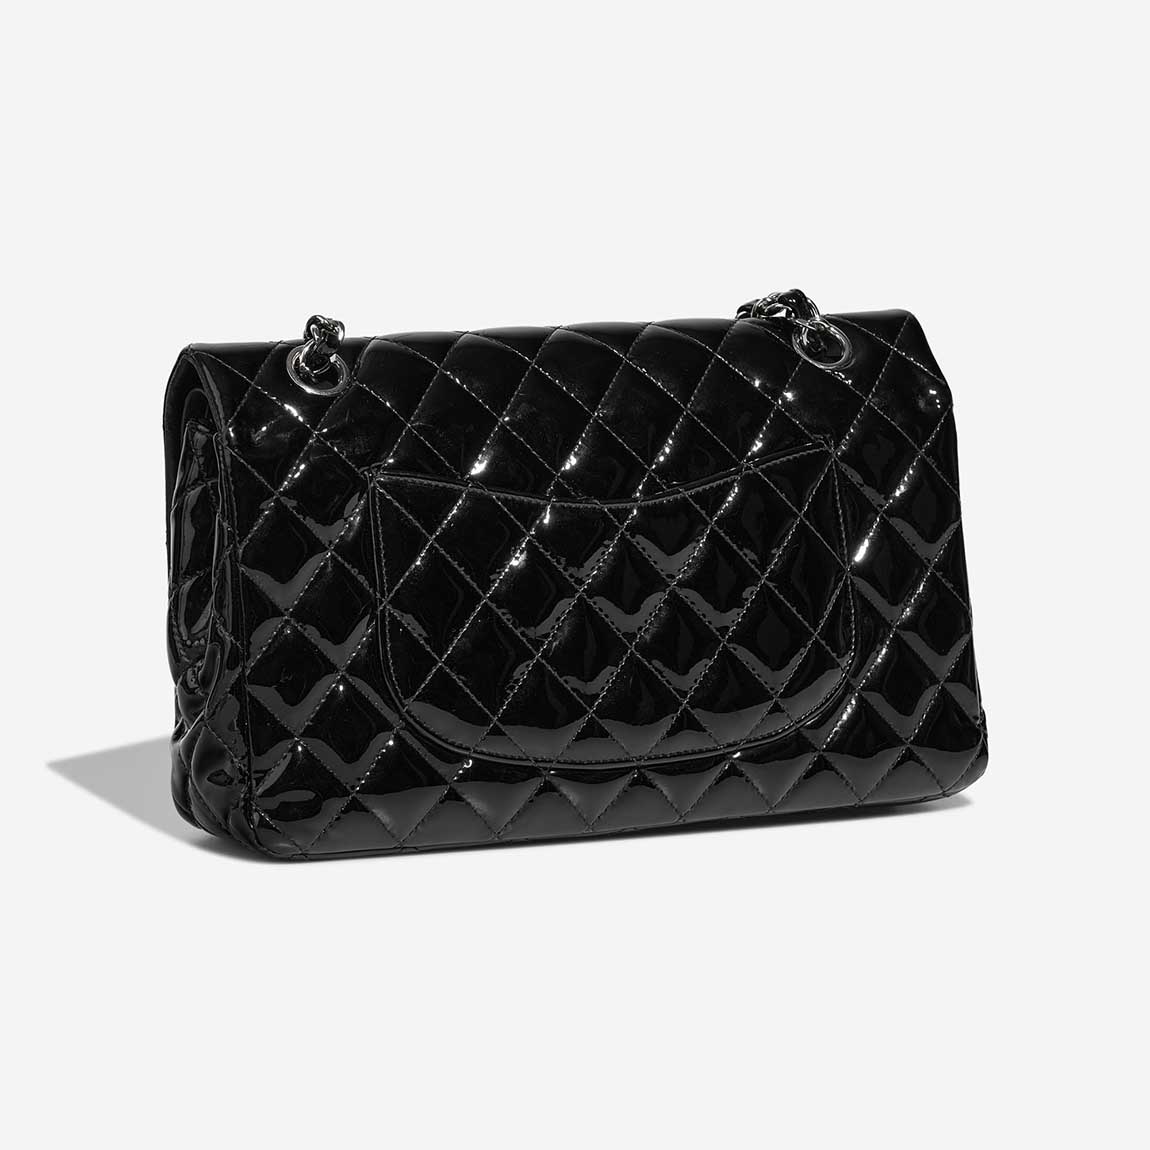 Chanel Timeless Medium Patent Black | Sell your designer bag